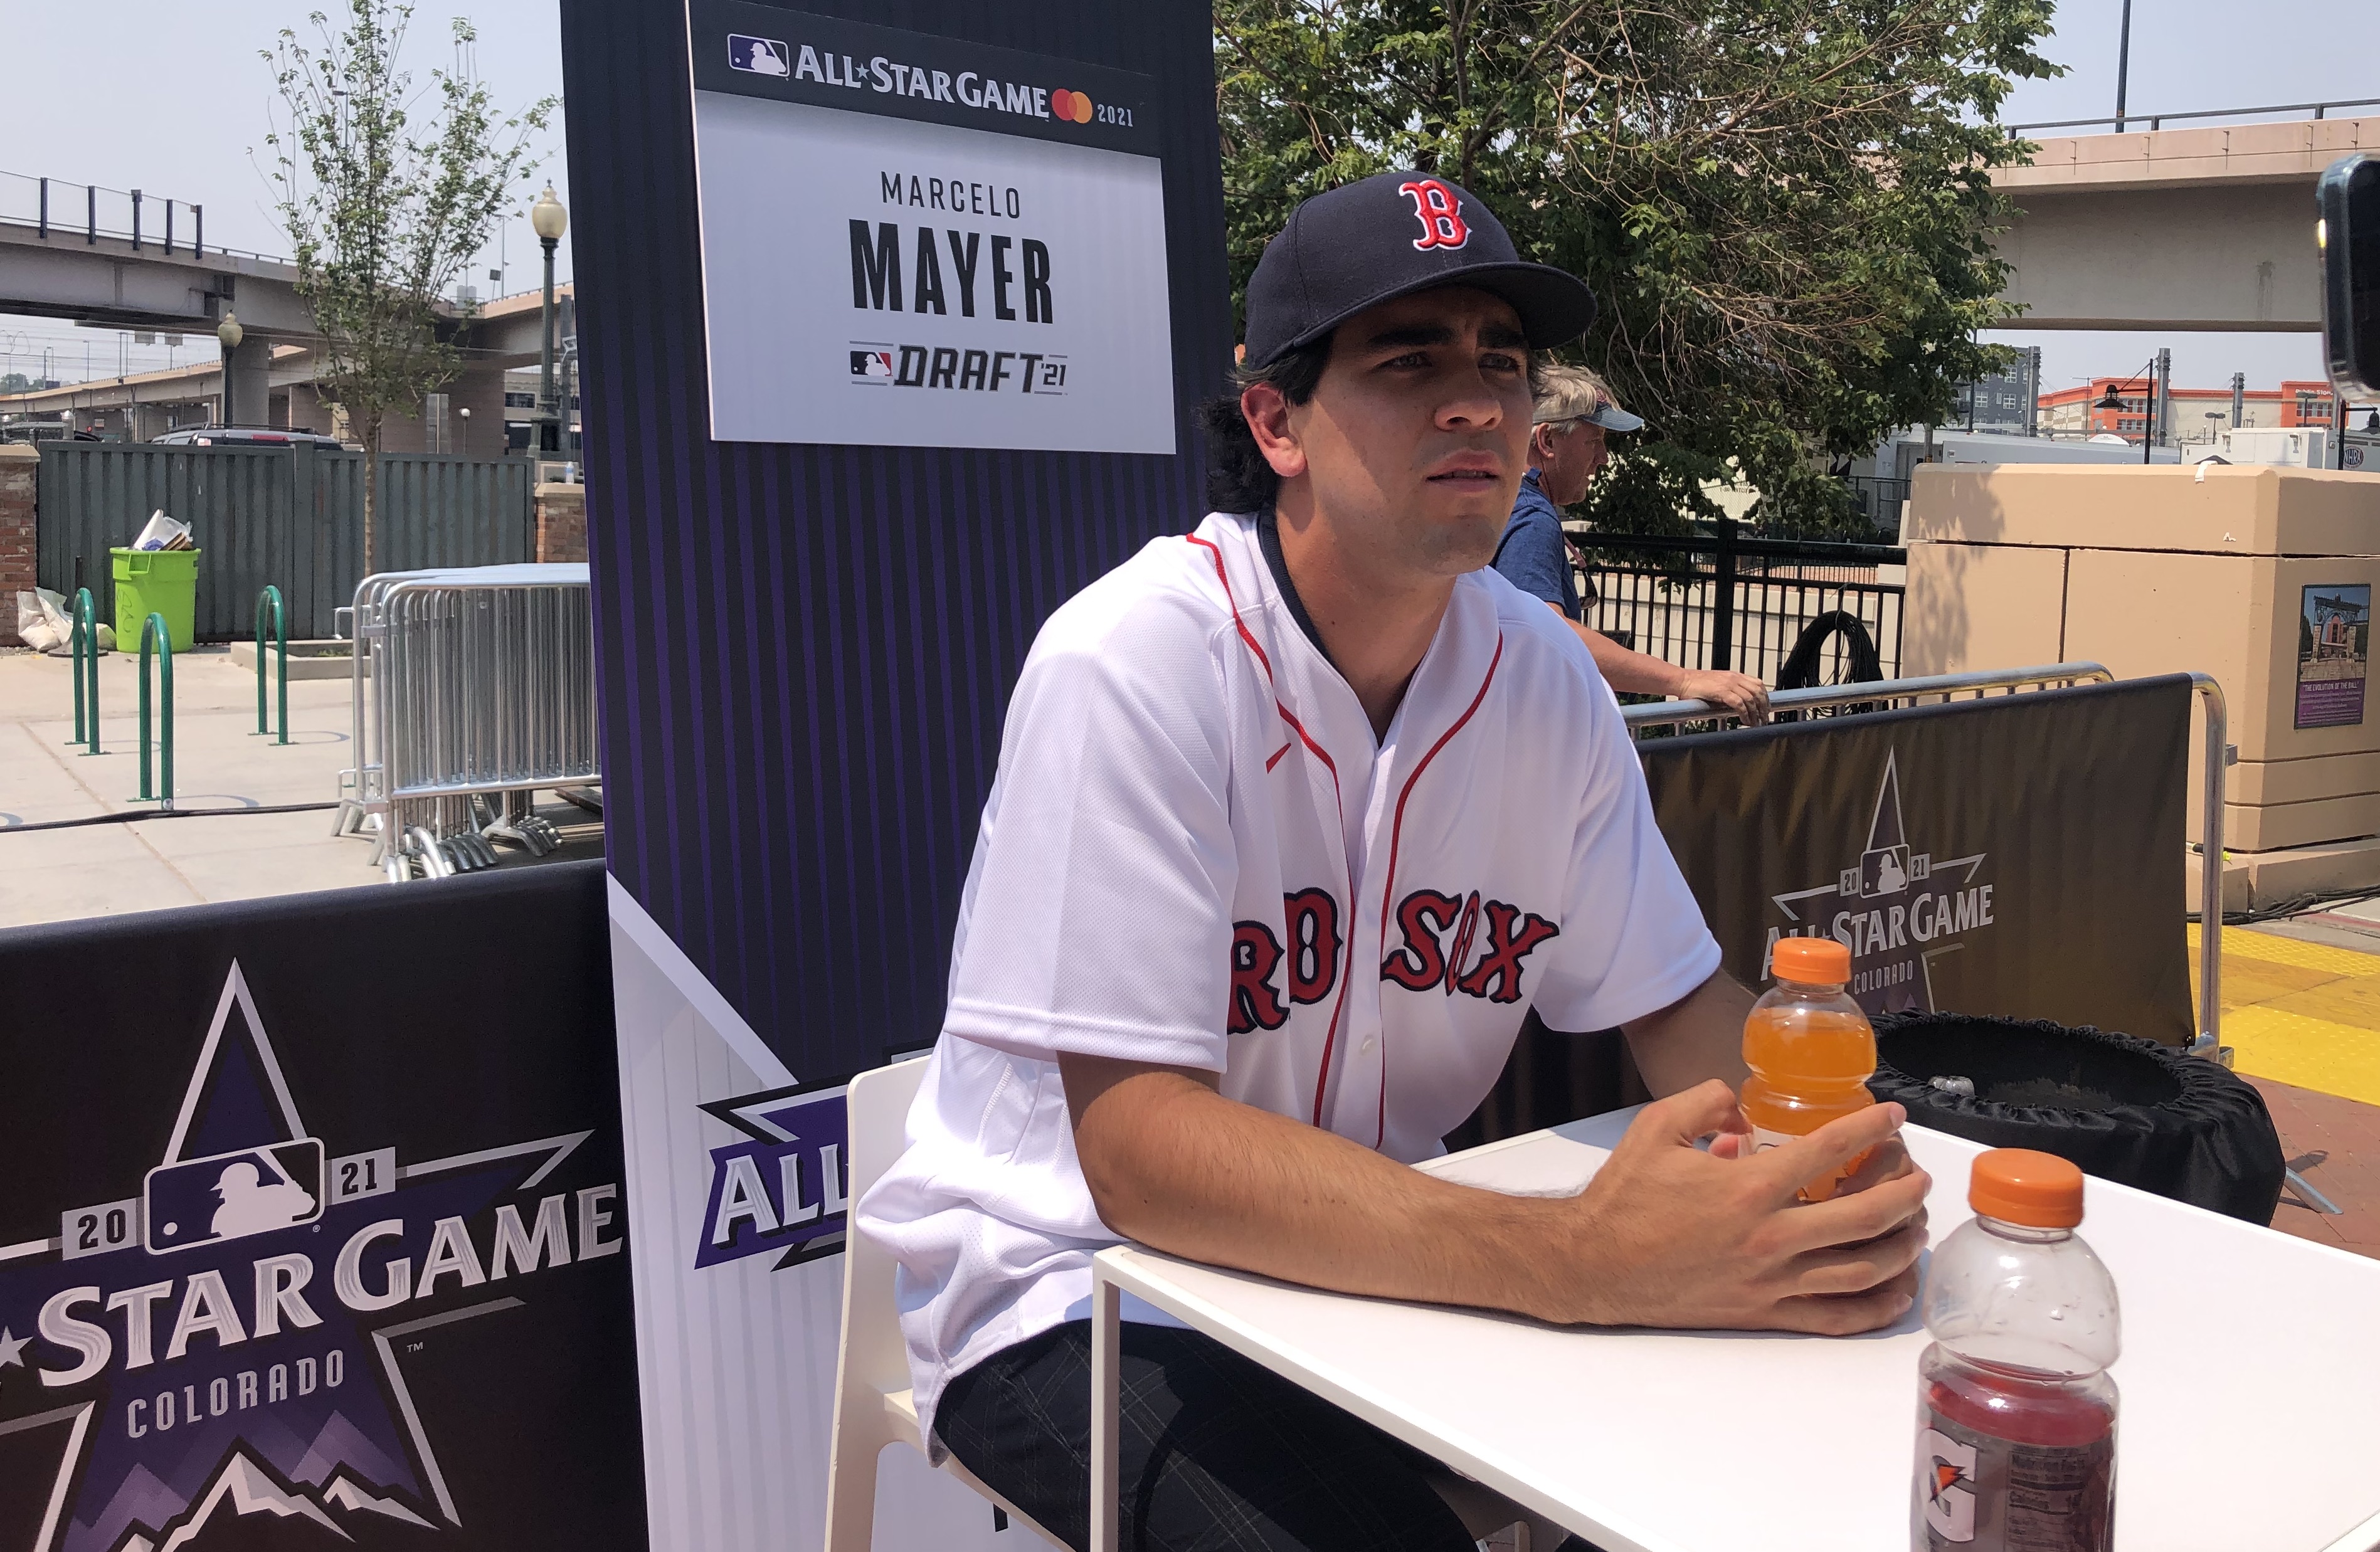 Hit bombs': Watch Red Sox draftee Marcelo Mayer meet Xander Bogaerts